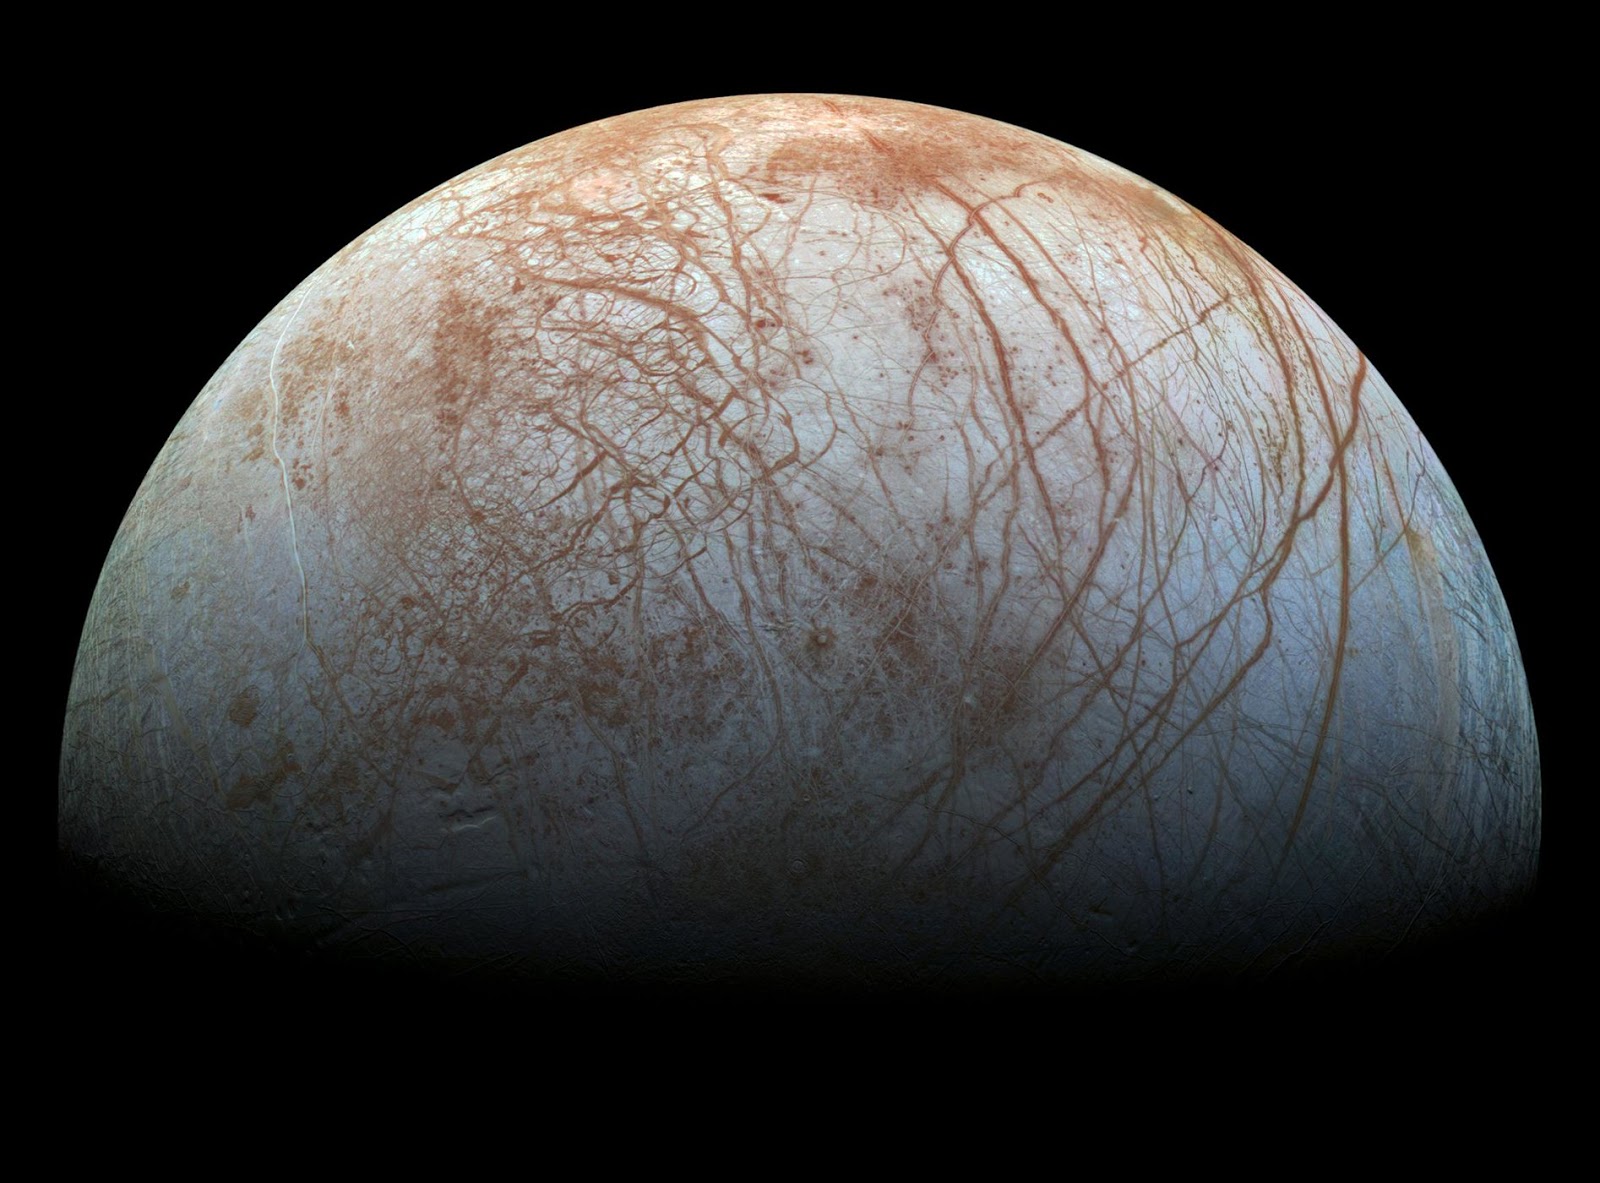 Image Credit: NASA/JPL-Caltech/SETI Institute